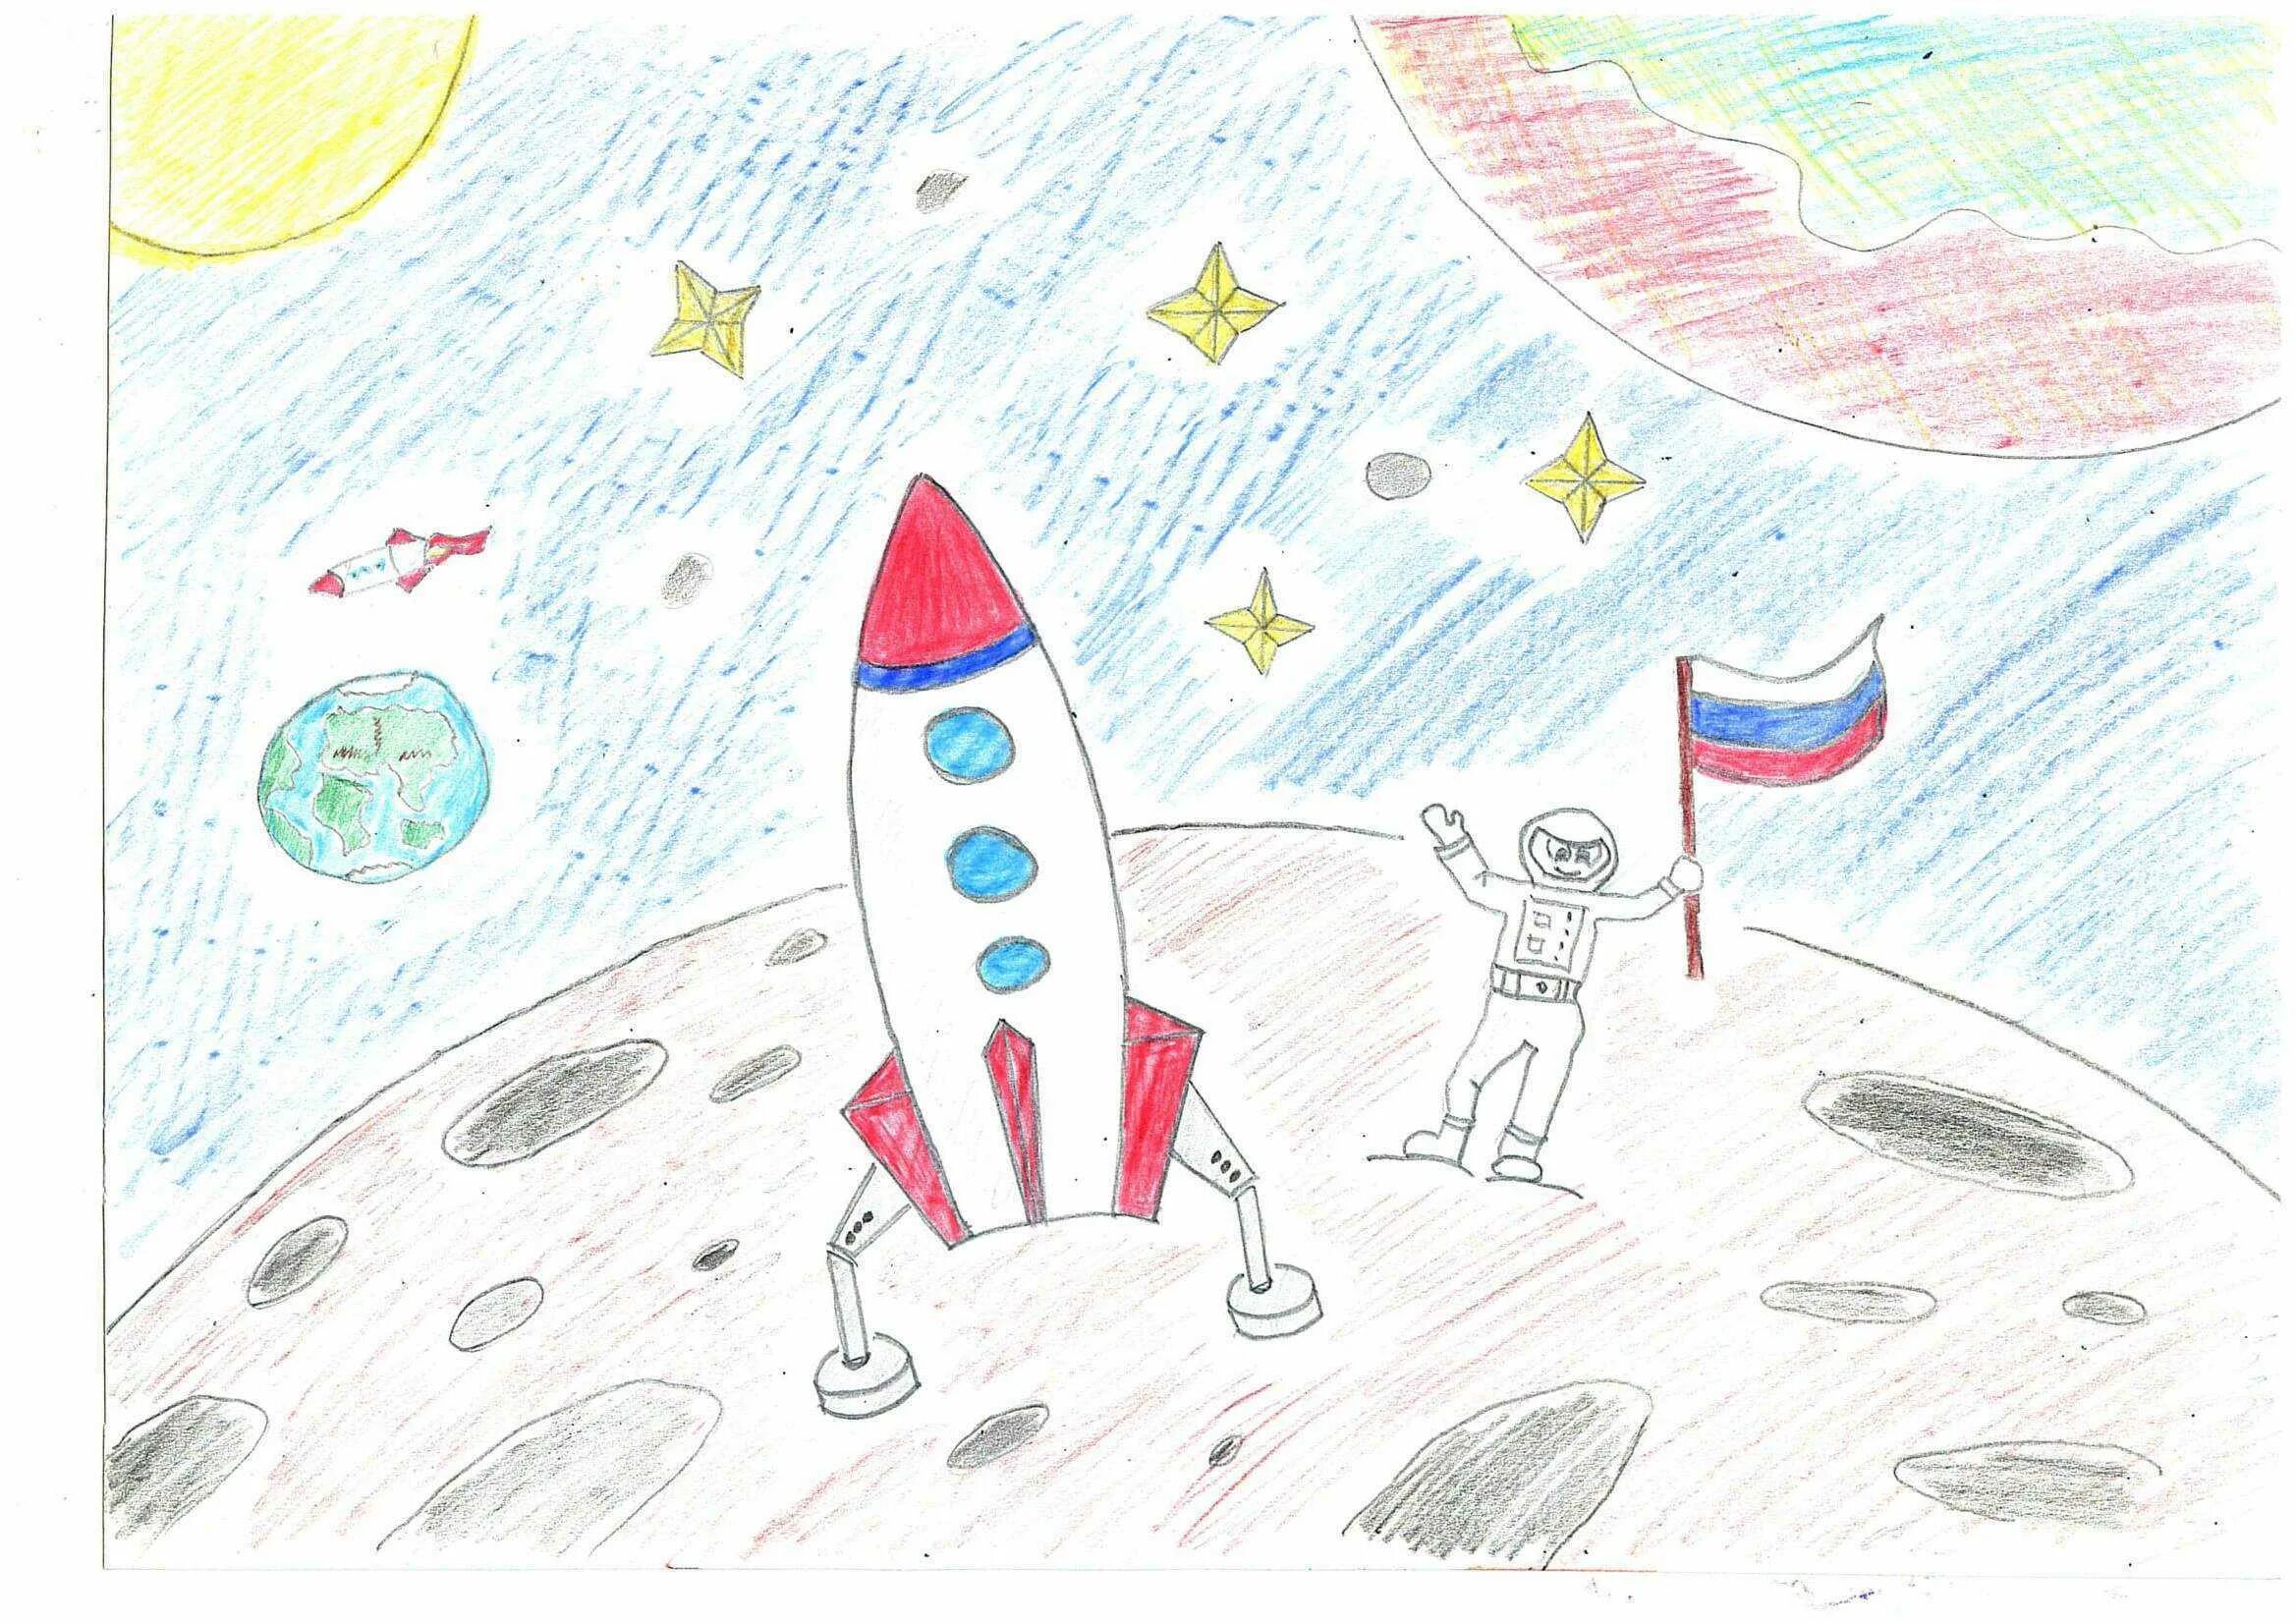 Рисунок на тему космонавтики 3 класс. Рисунок на тему космос. Рисунок на космическую тему. Рисование ко Дню космонавтики. Рисунок ко Дню космонавтики.